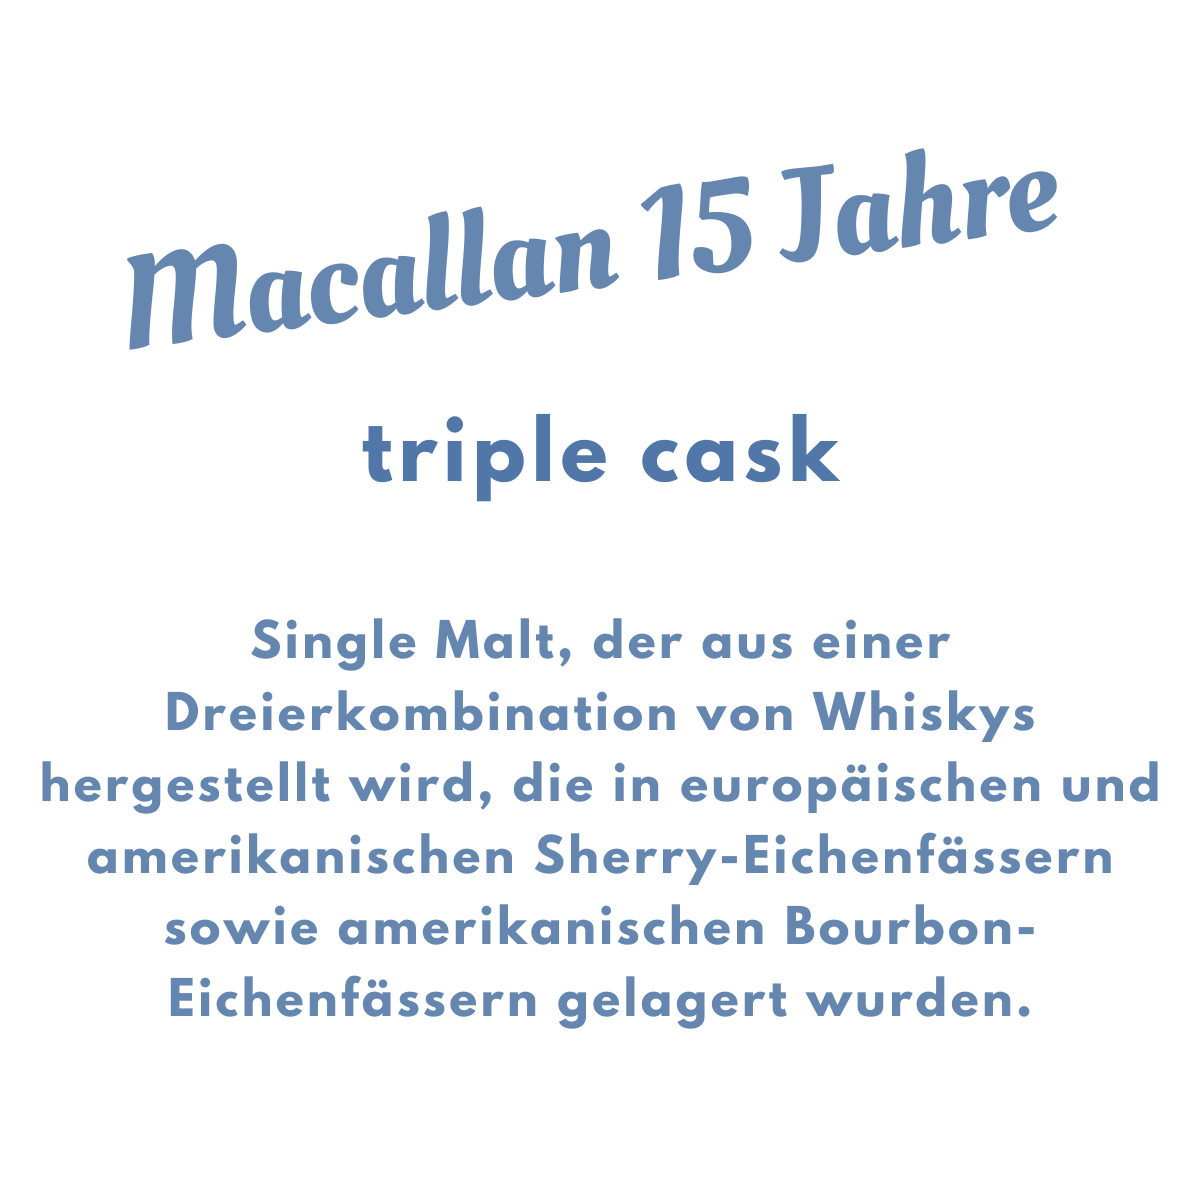 Macallan 15 Jahre triple cask -  43% Vol. / 0,7l  (Sammlerstück/Sonderregel)